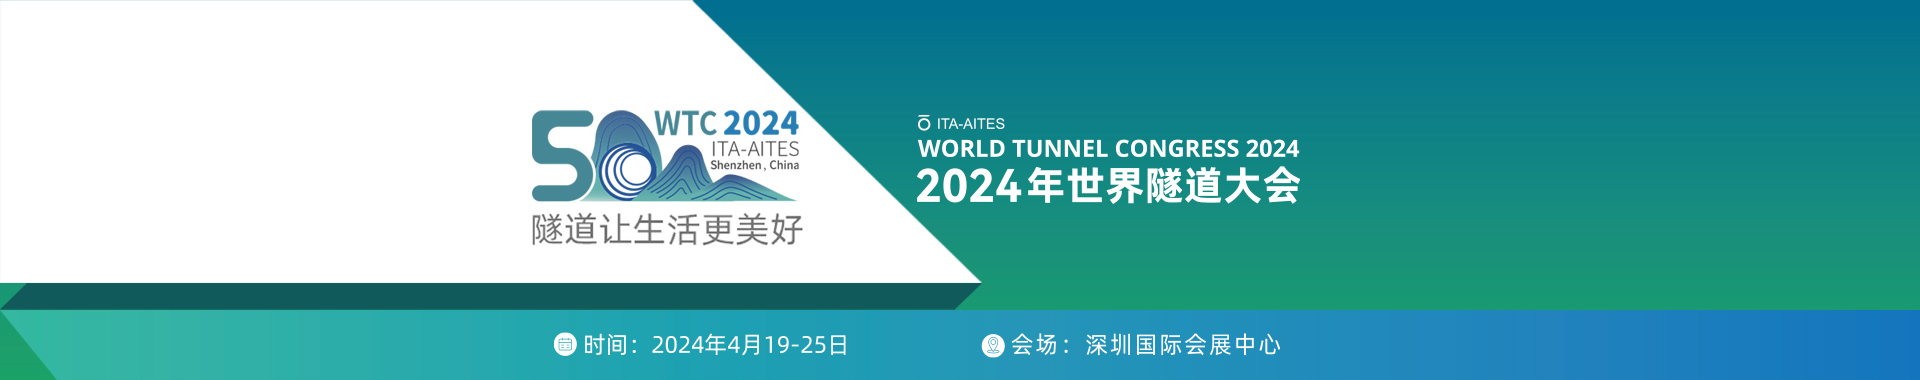 wtc2024+2020中国隧道与地下工程大会